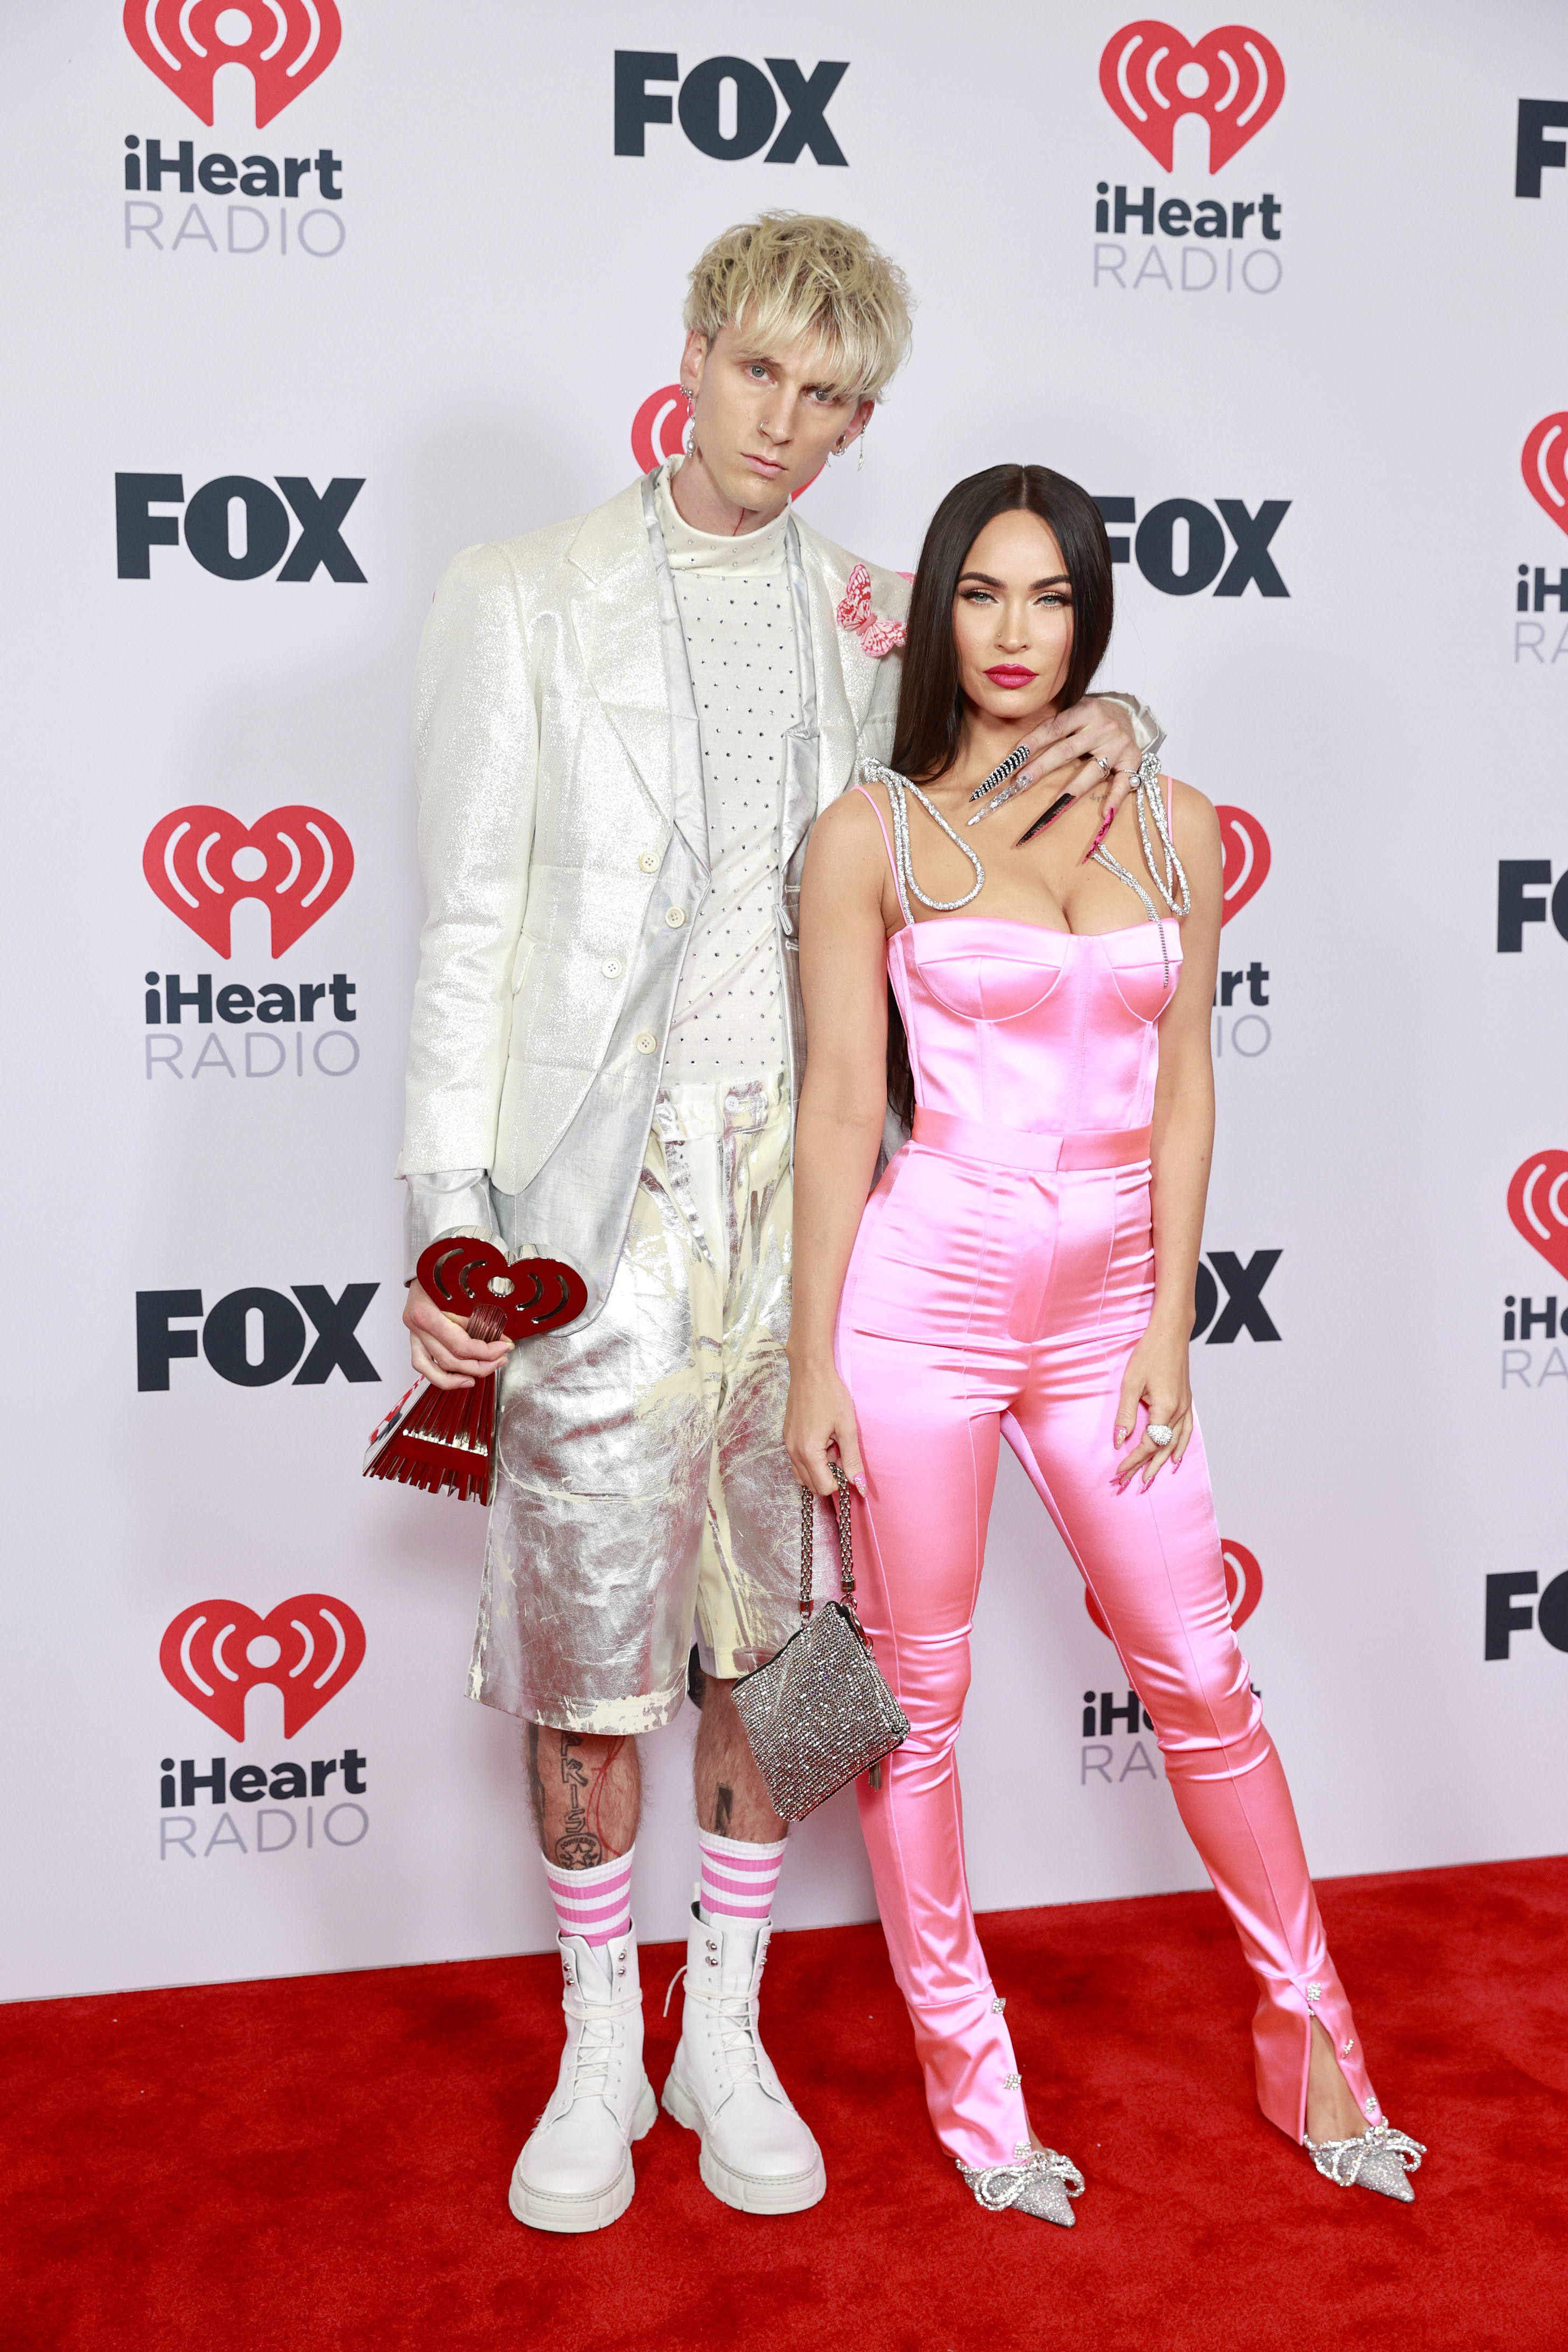 Megan Fox and Machine Gun Kelly at the 2021 iHeartRadio Music Awards